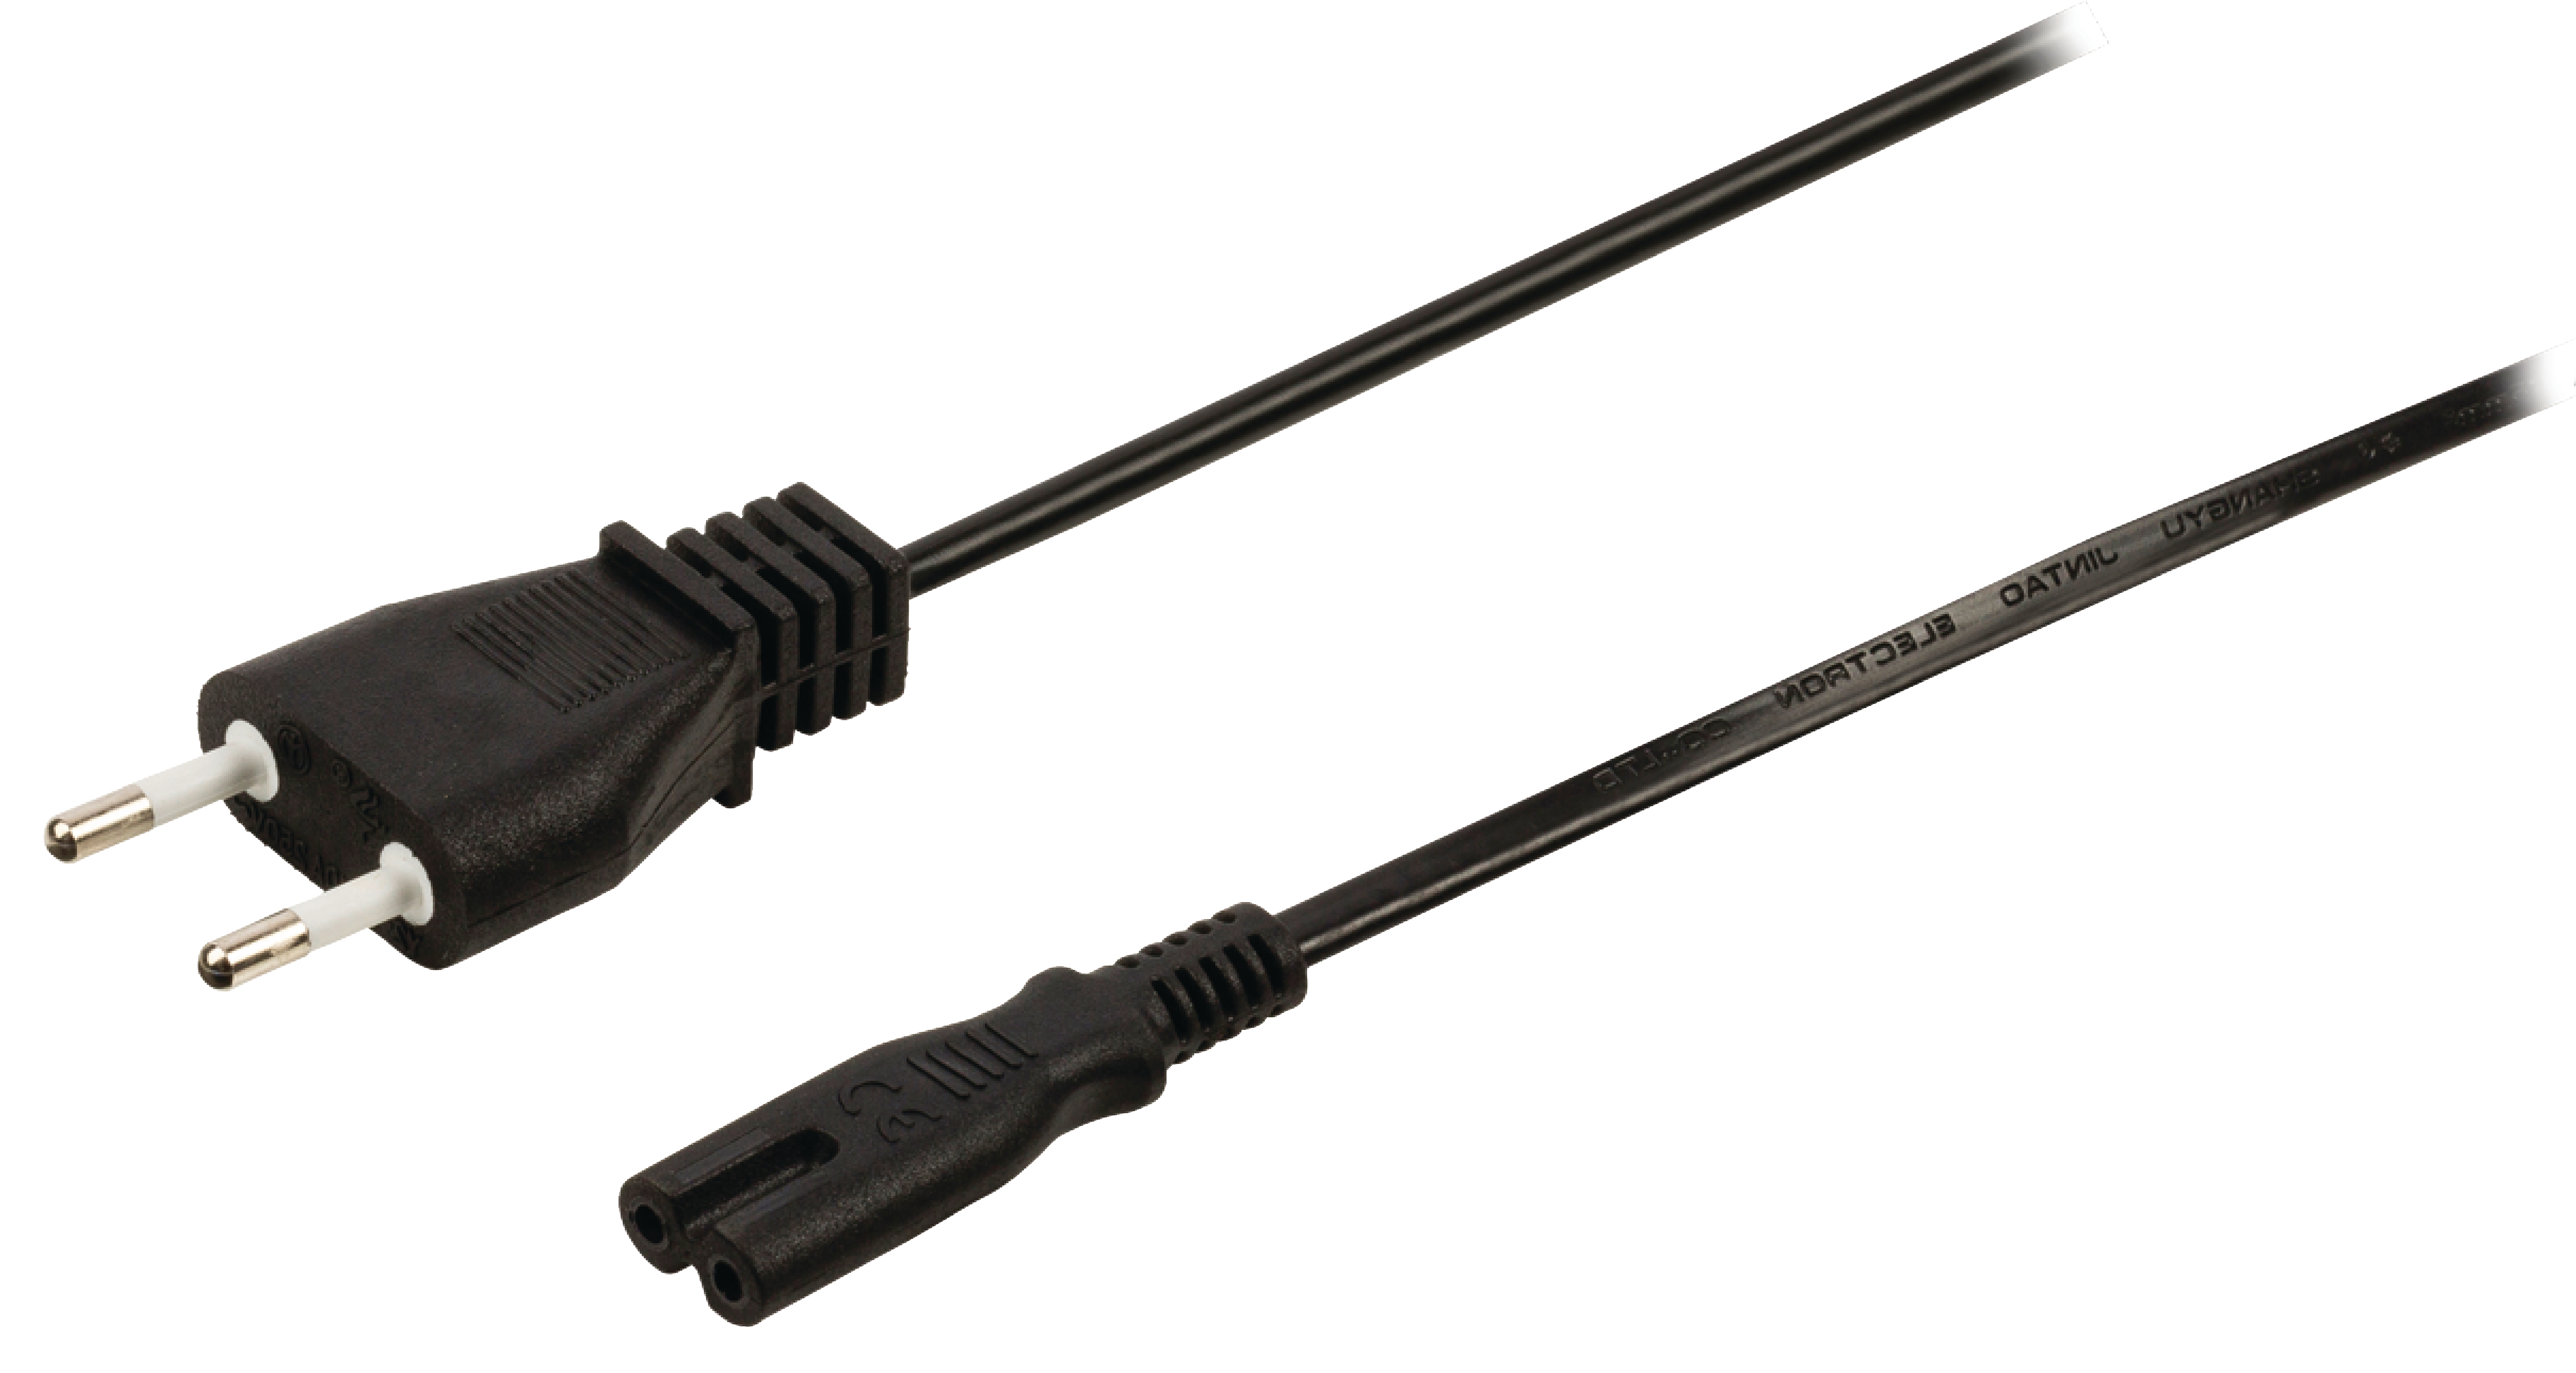 Cable d'alimentation longueur 1,2m SCHUKO 183911050 / 996530025808 -  MAPALGA CAFES